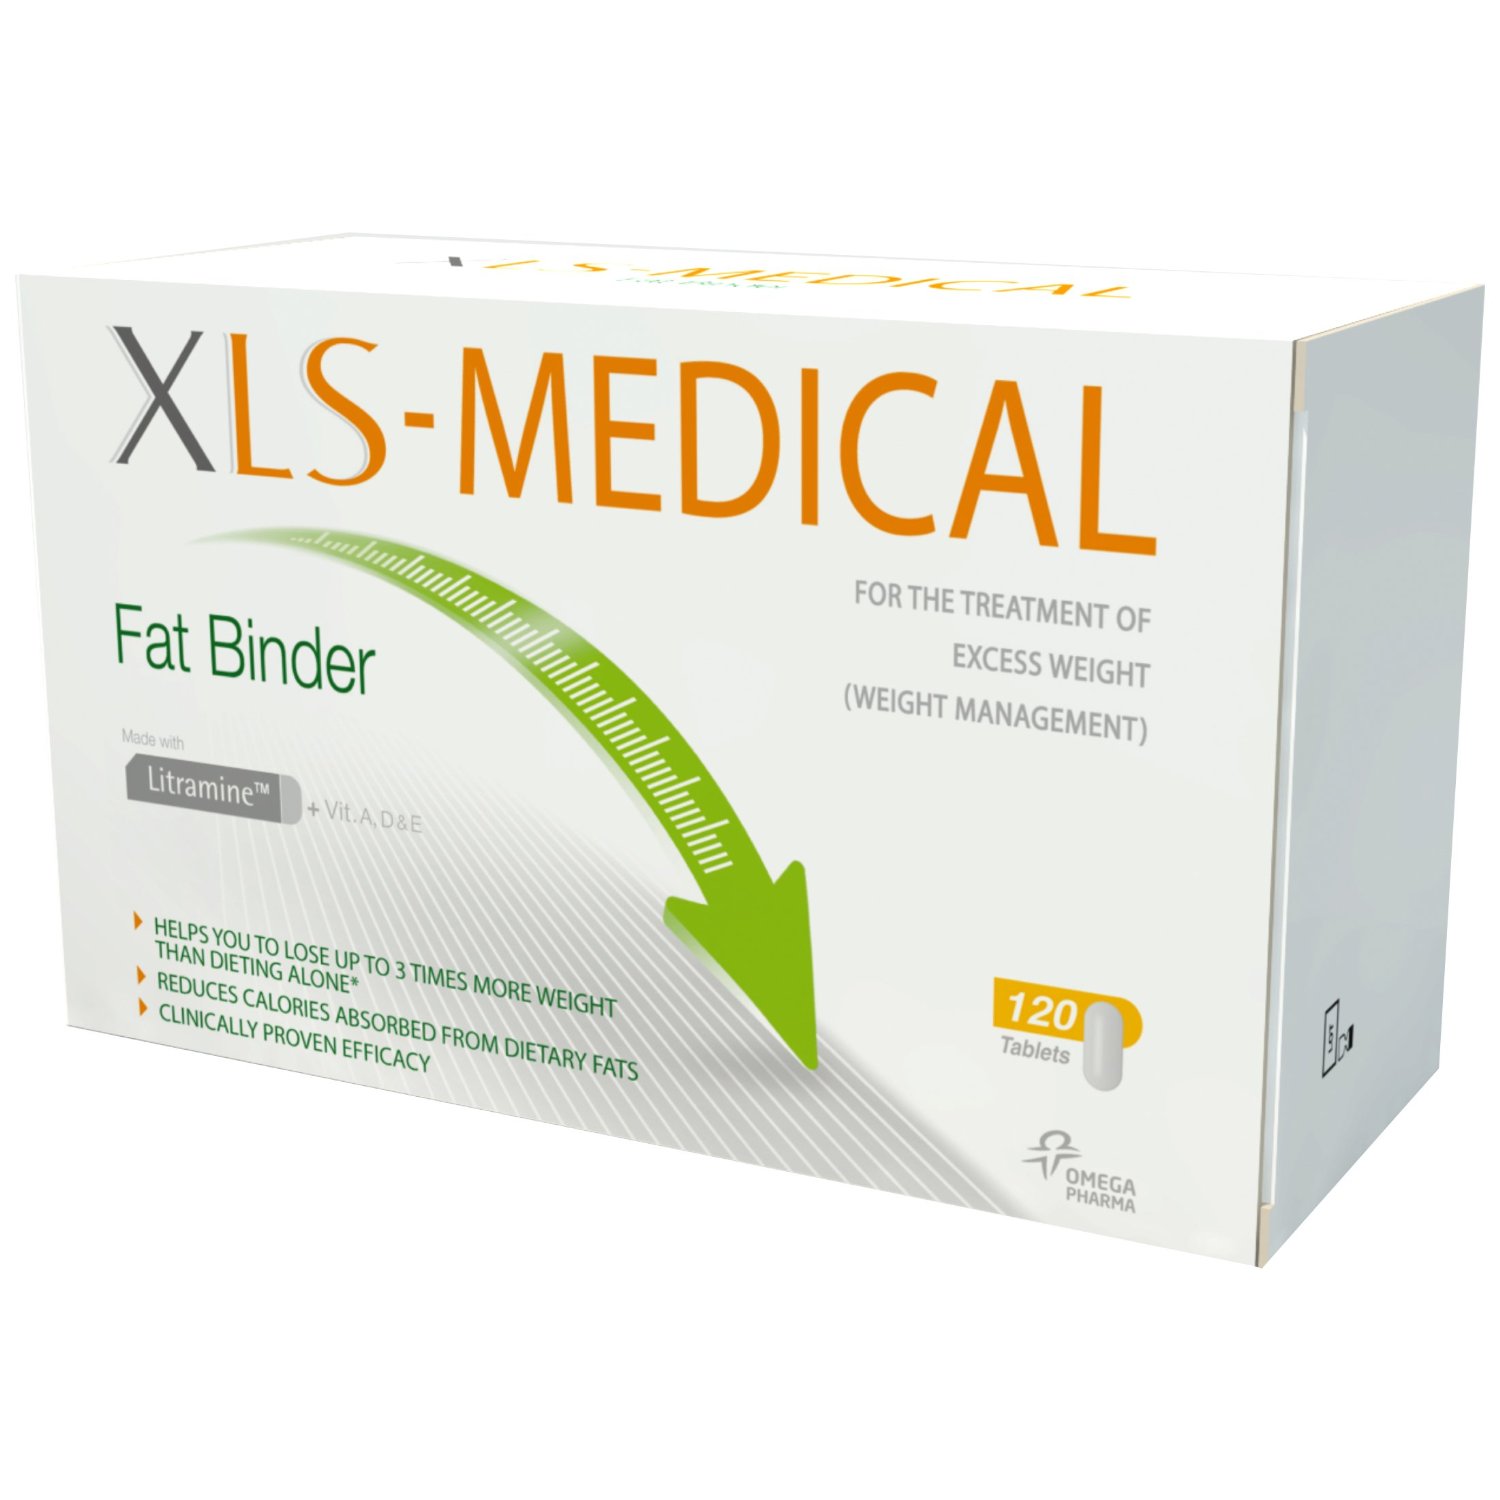 http://www.pillboxchemists.com/wp-content/uploads/2013/04/Xls-medical-fat-binder-60.jpg